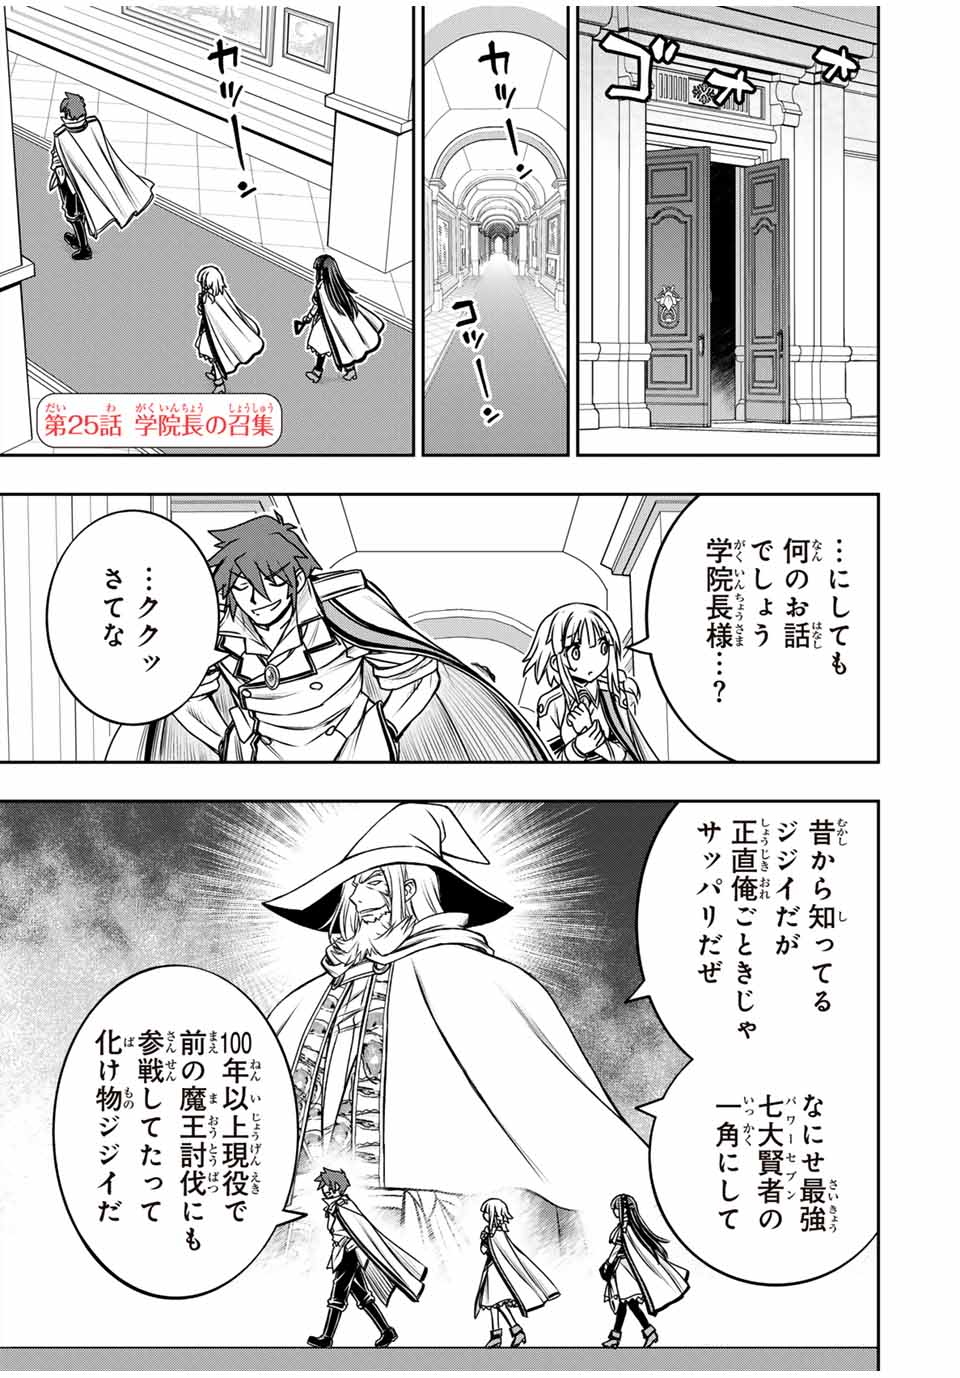 Nengan no Akuyaku Reijou (Last Boss) no Karada wo Teniiretazo!  - Chapter 25 - Page 1